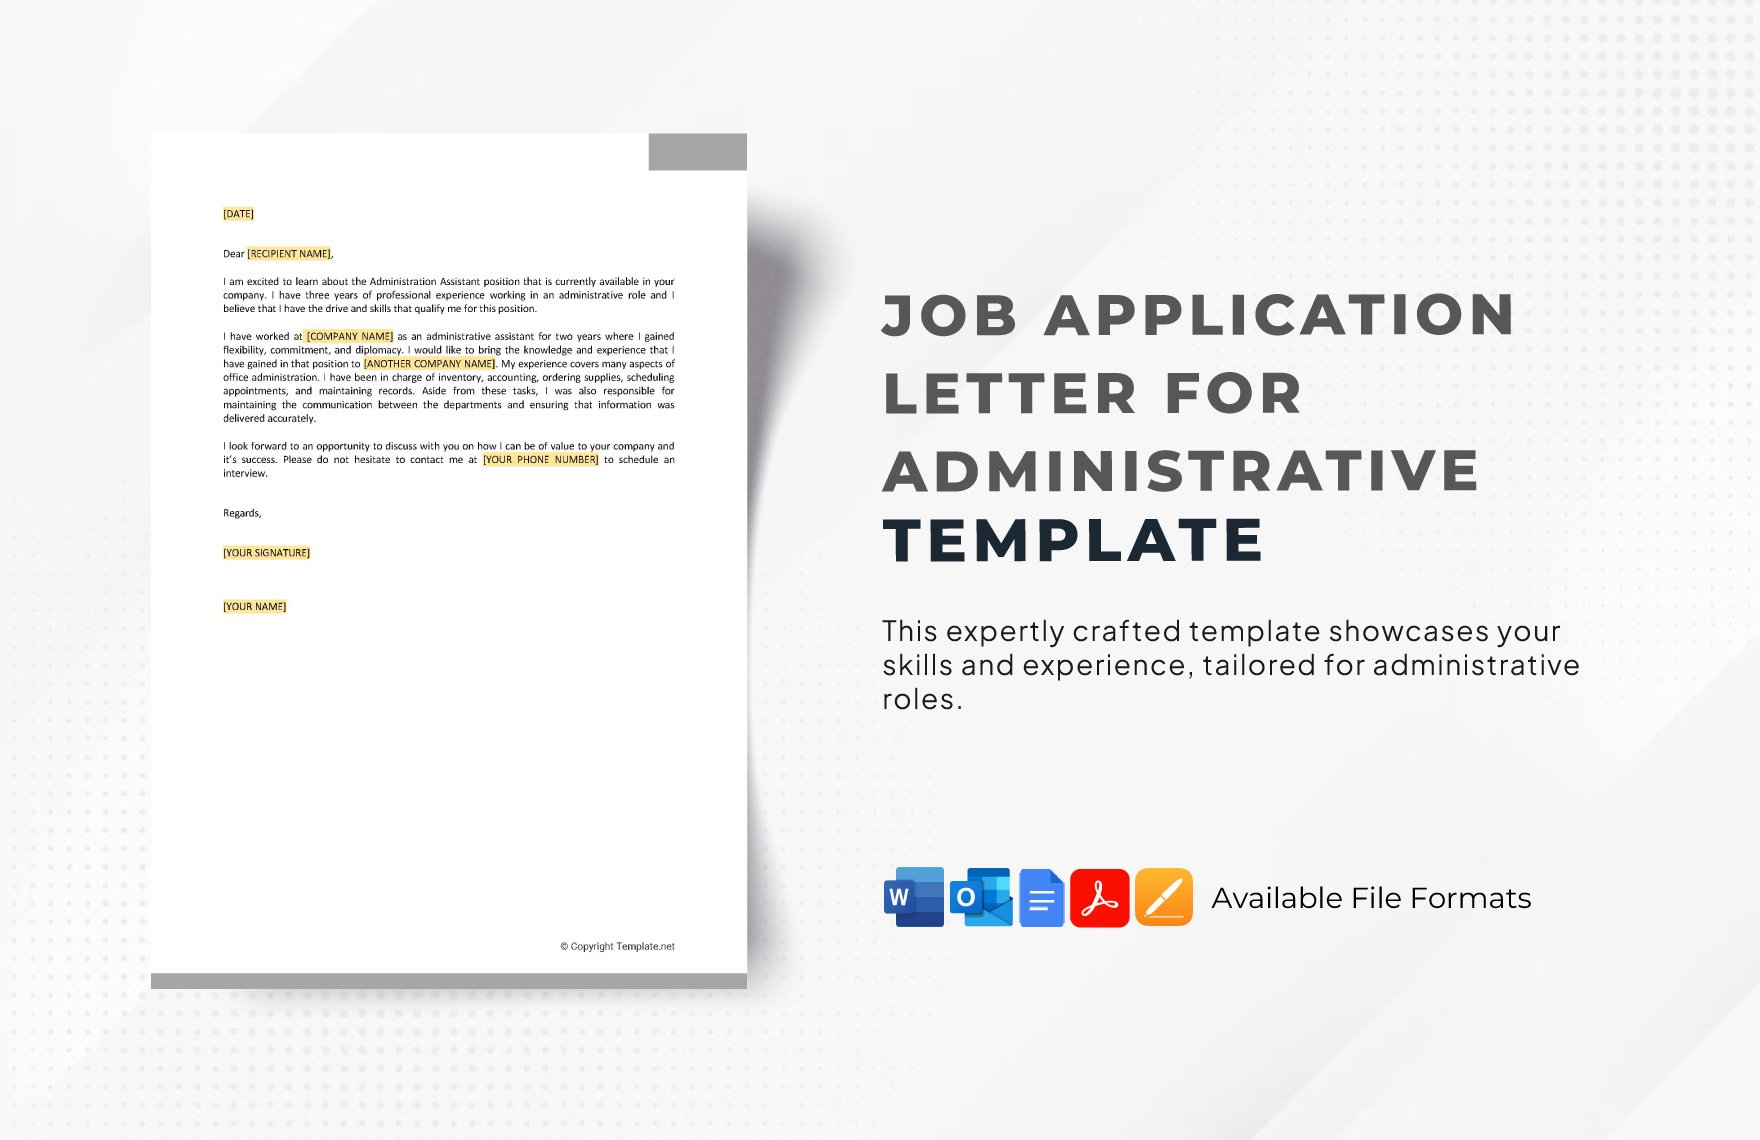 Job Application Letter for Administrative